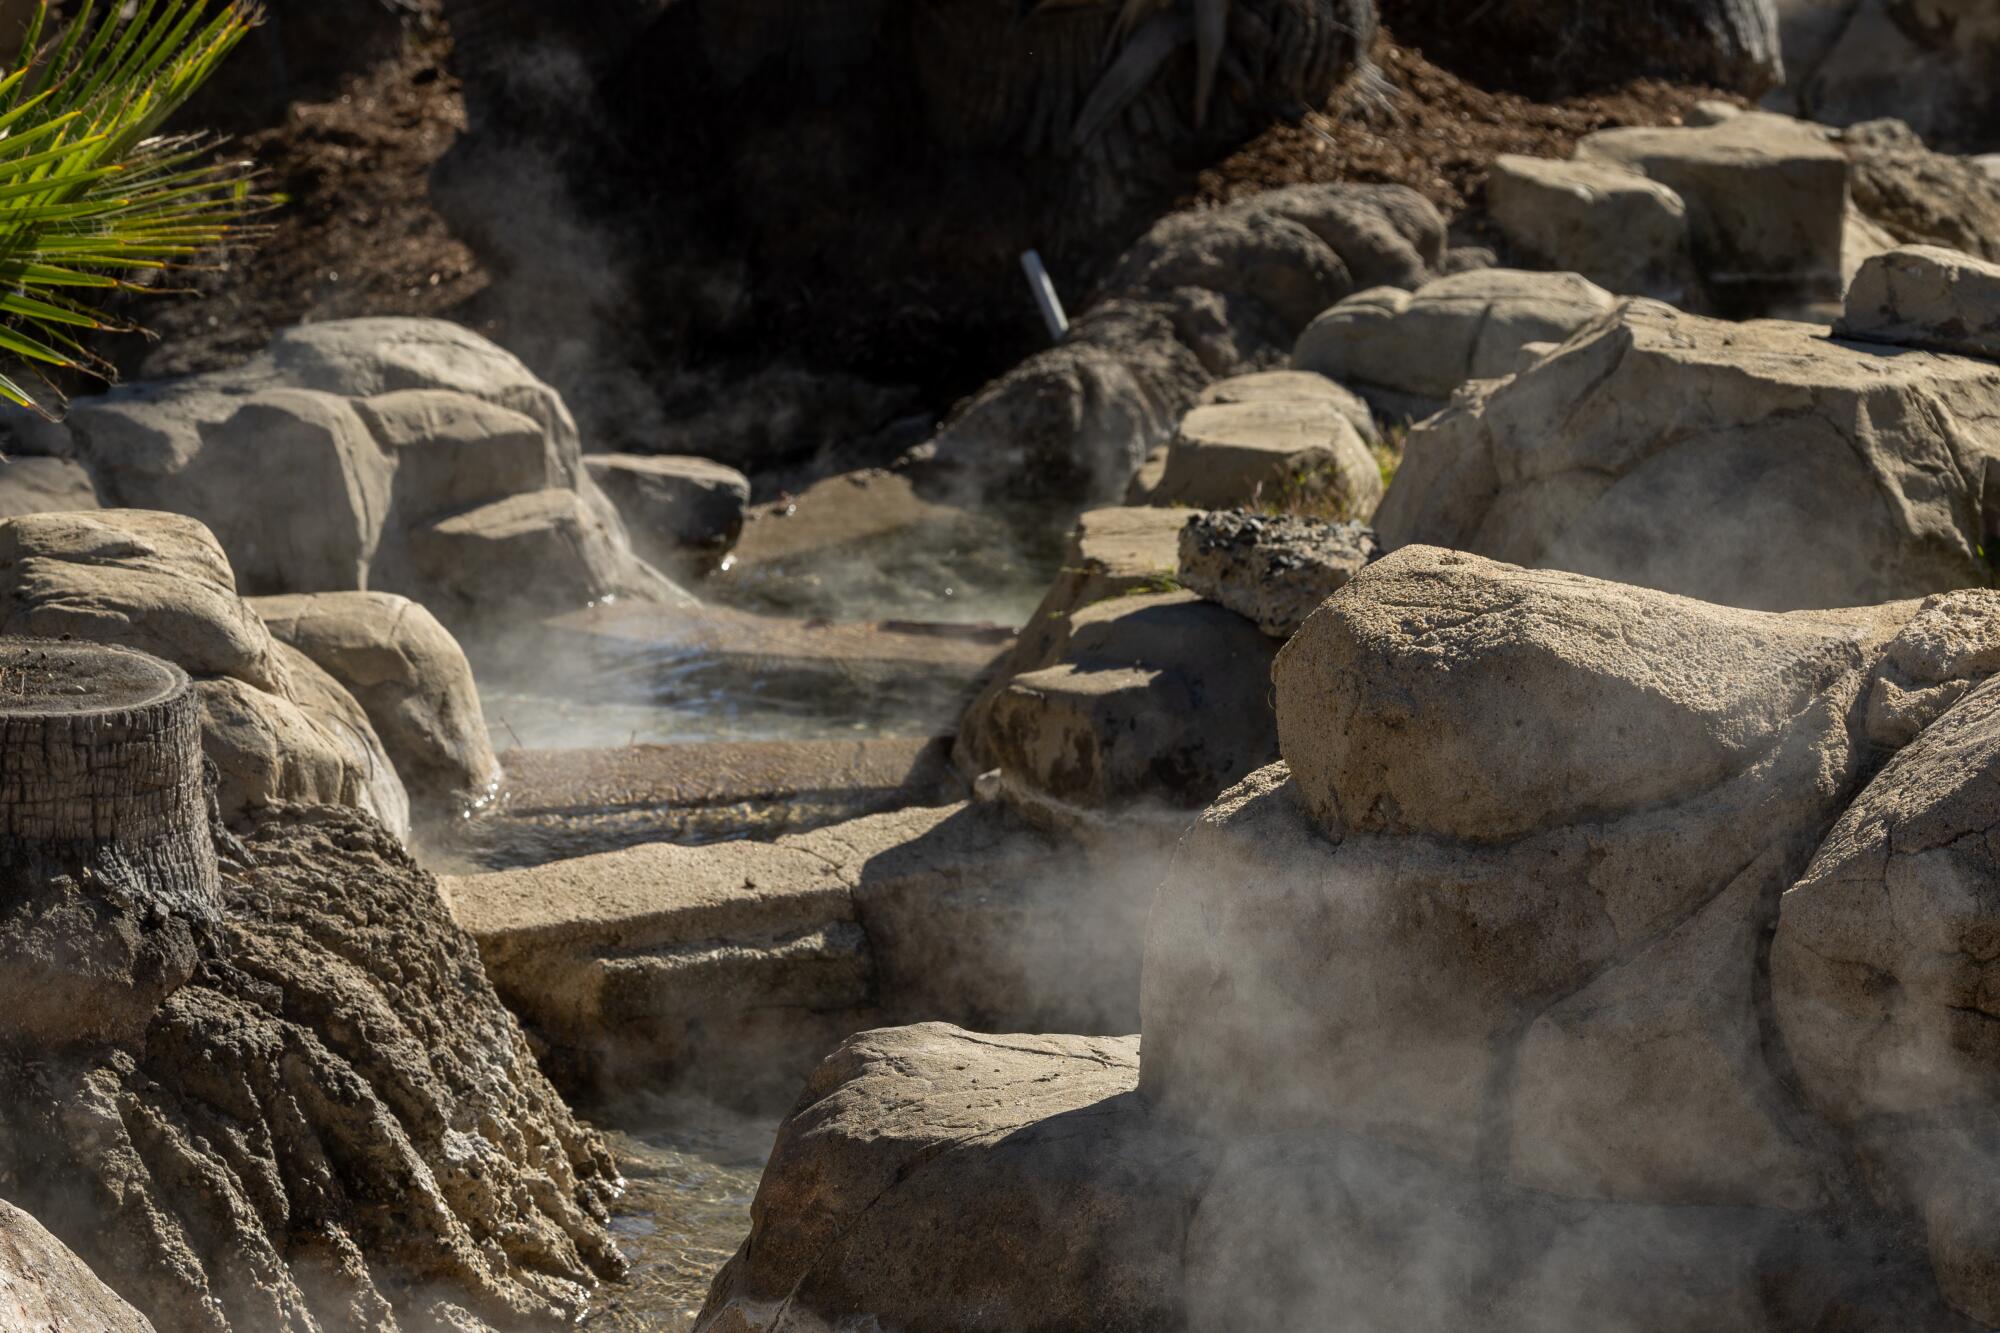 Steam rises from the geothermal water flowing through Murrieta Hot Springs Resort.